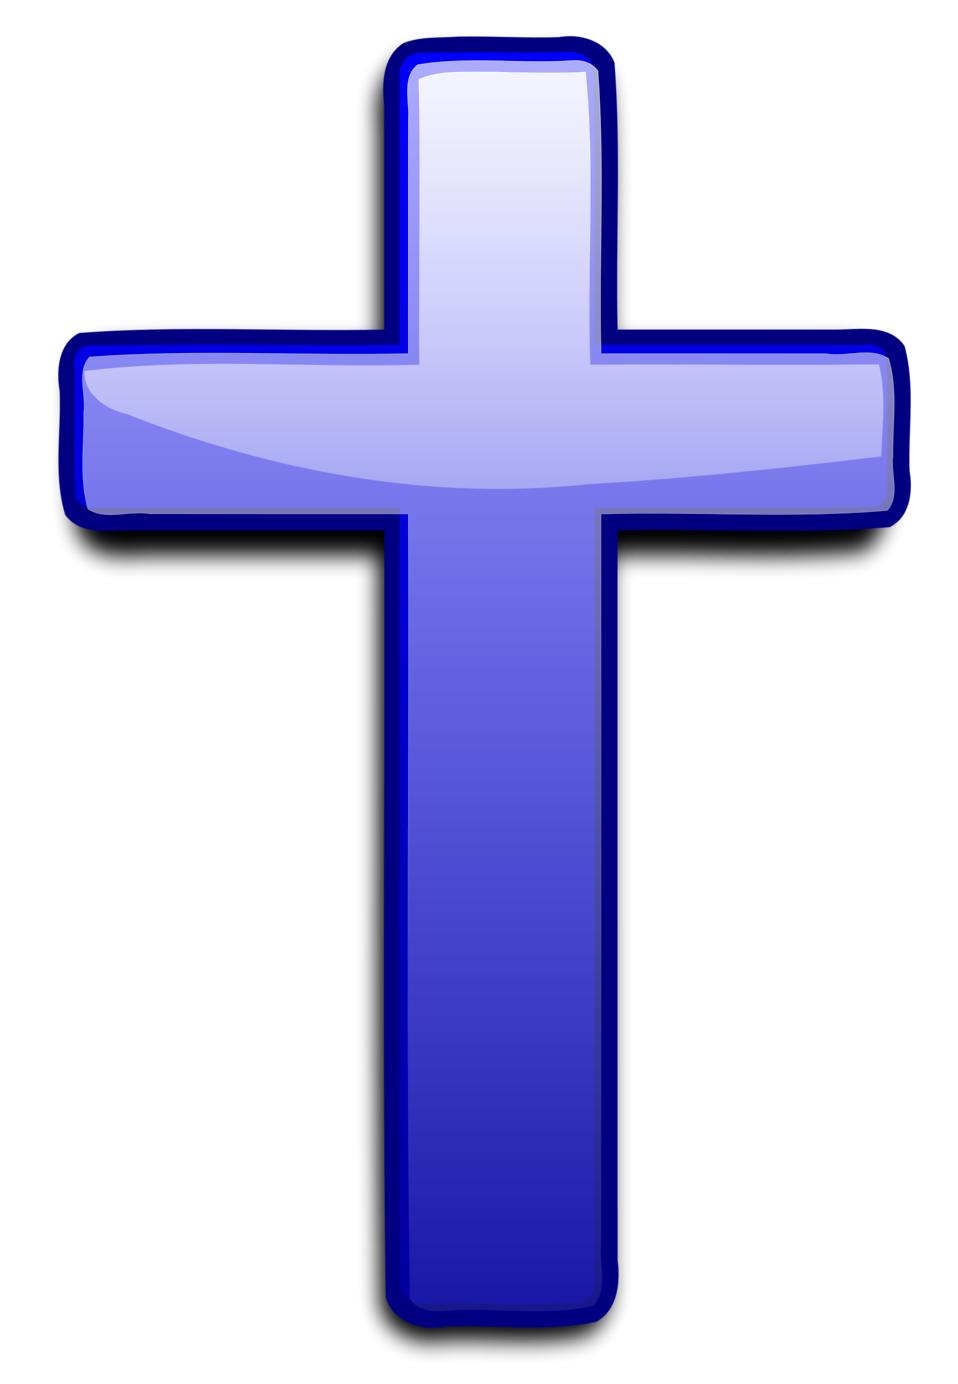 Cross | Free Stock Photo | Illustration of a blue cross | # 16544